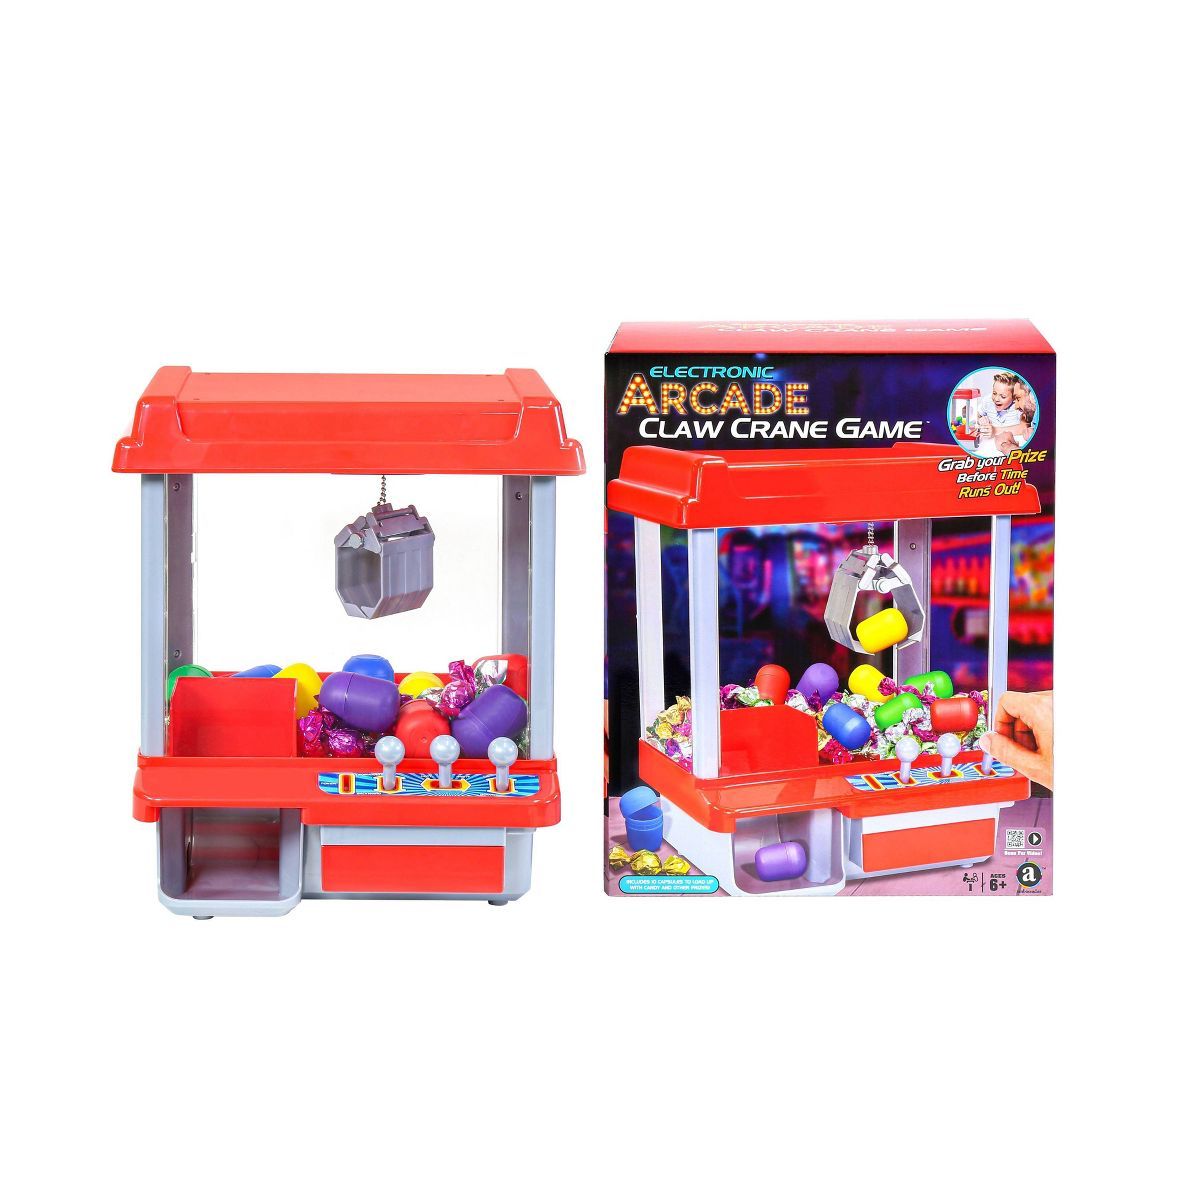 Ambassador Arcade Claw Game 3 Joystick Version with Plastic Egg Capsules | Target